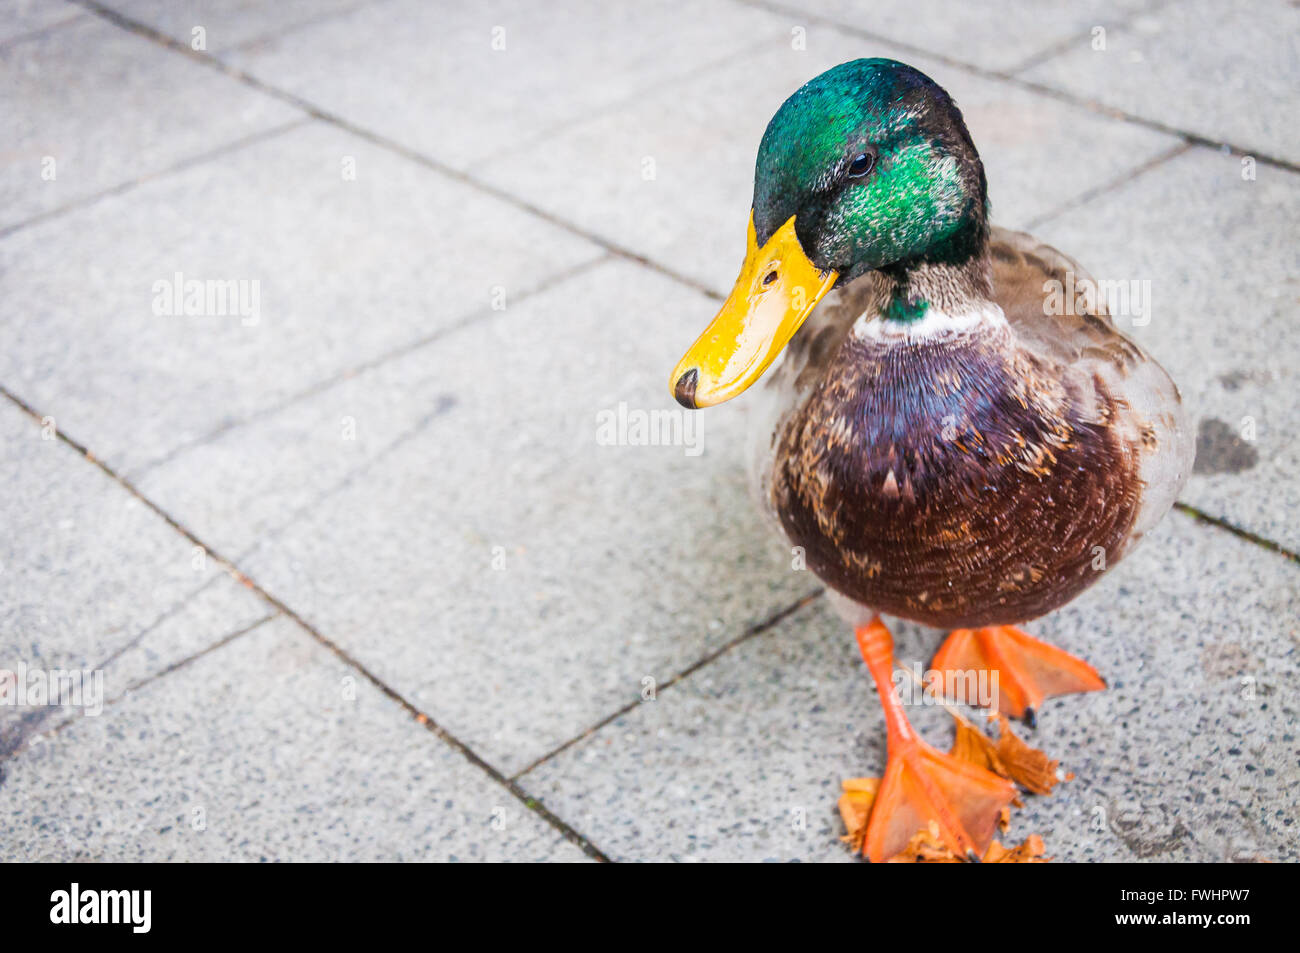 Mallard - green head , orange feet , and yellow beak duck walking on street Stock Photo